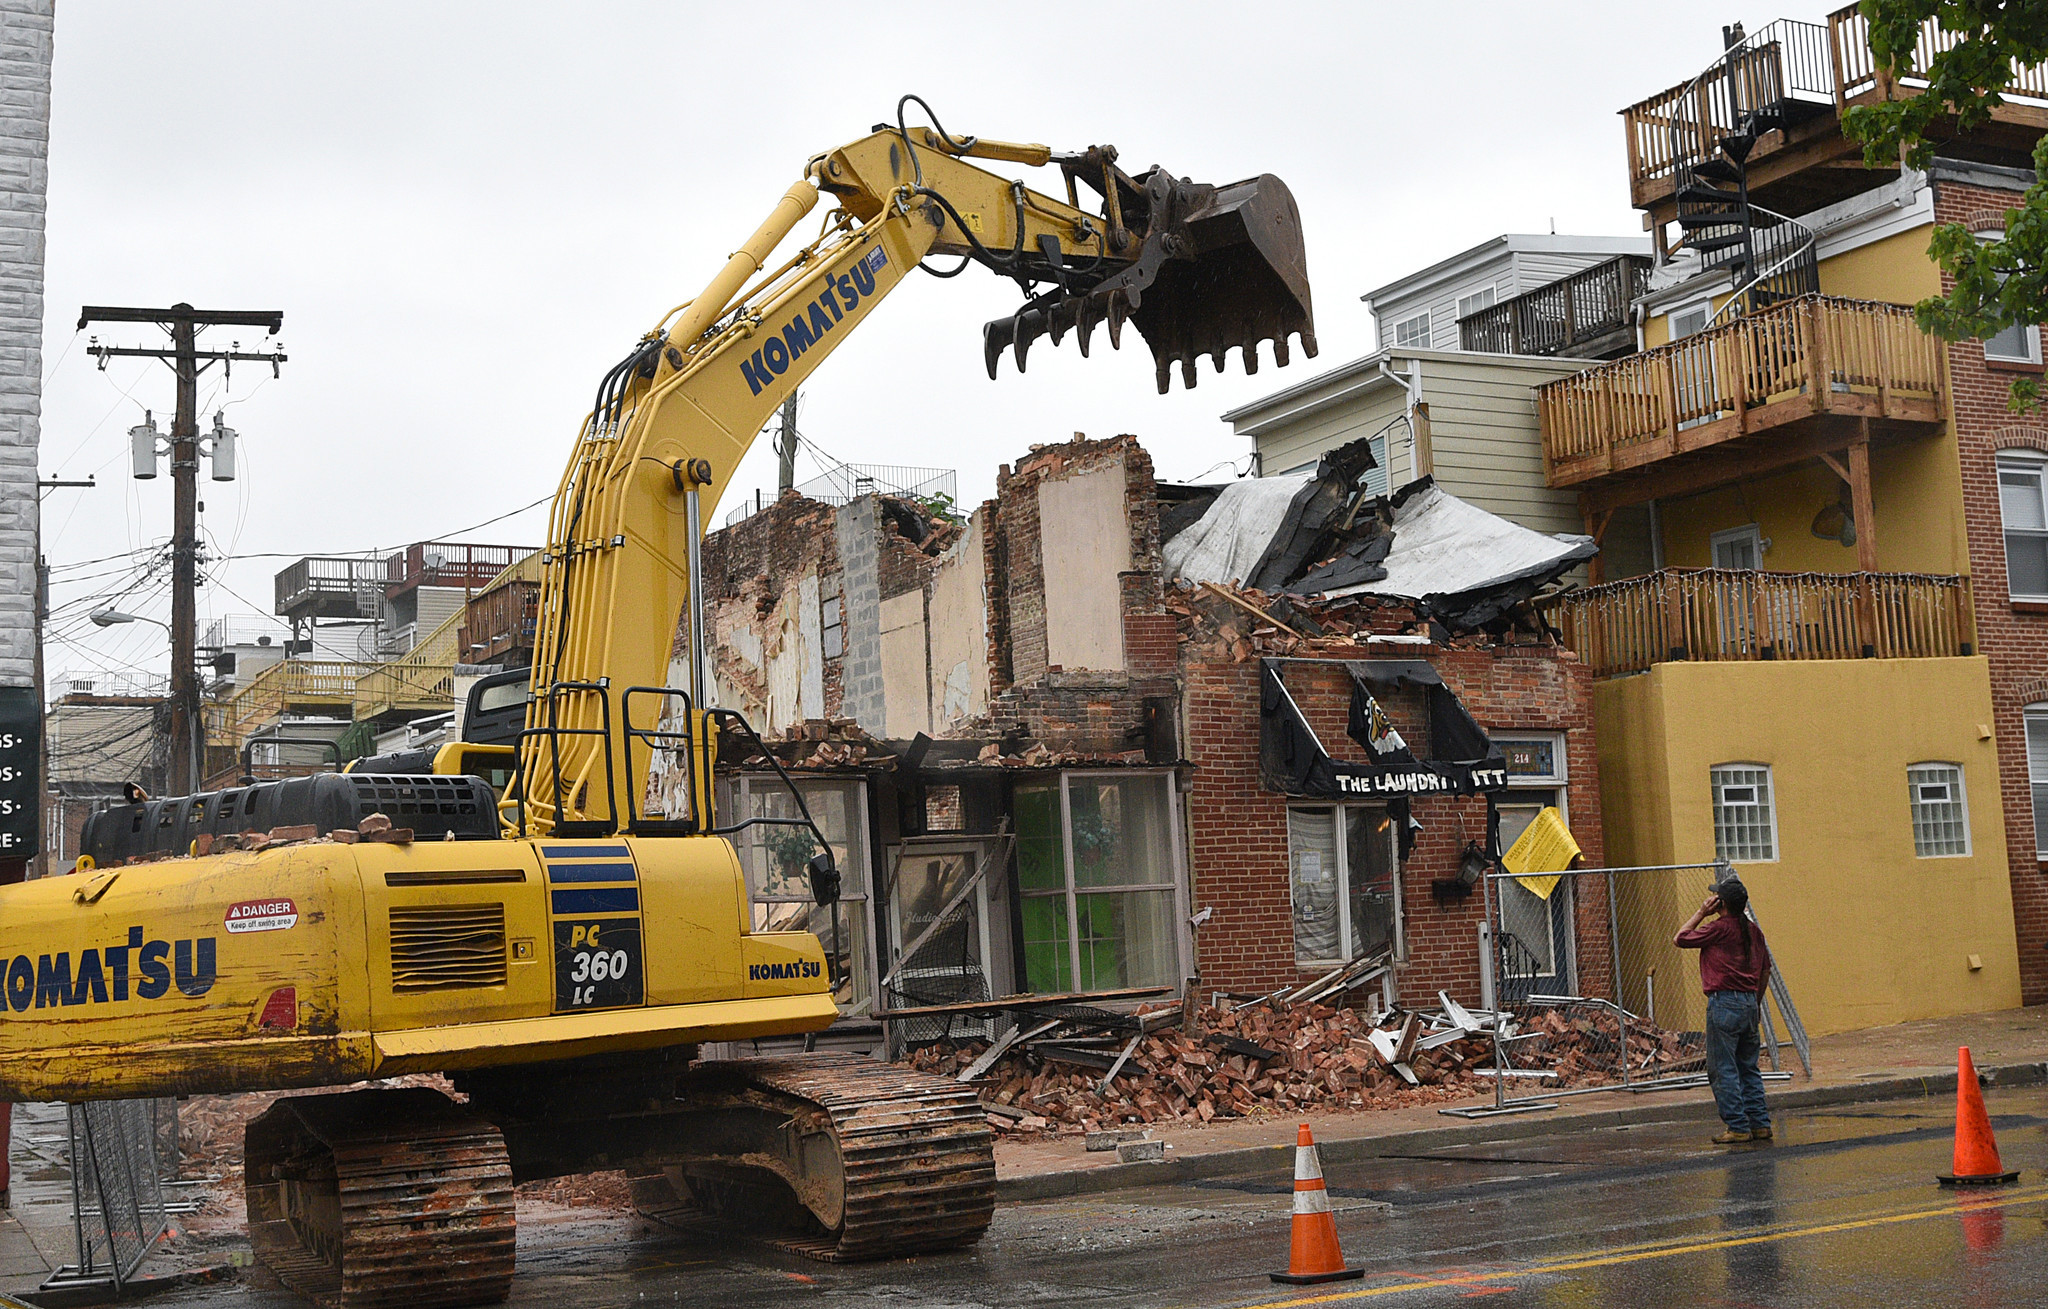 Demolition notice arrives days after Baltimore building already torn